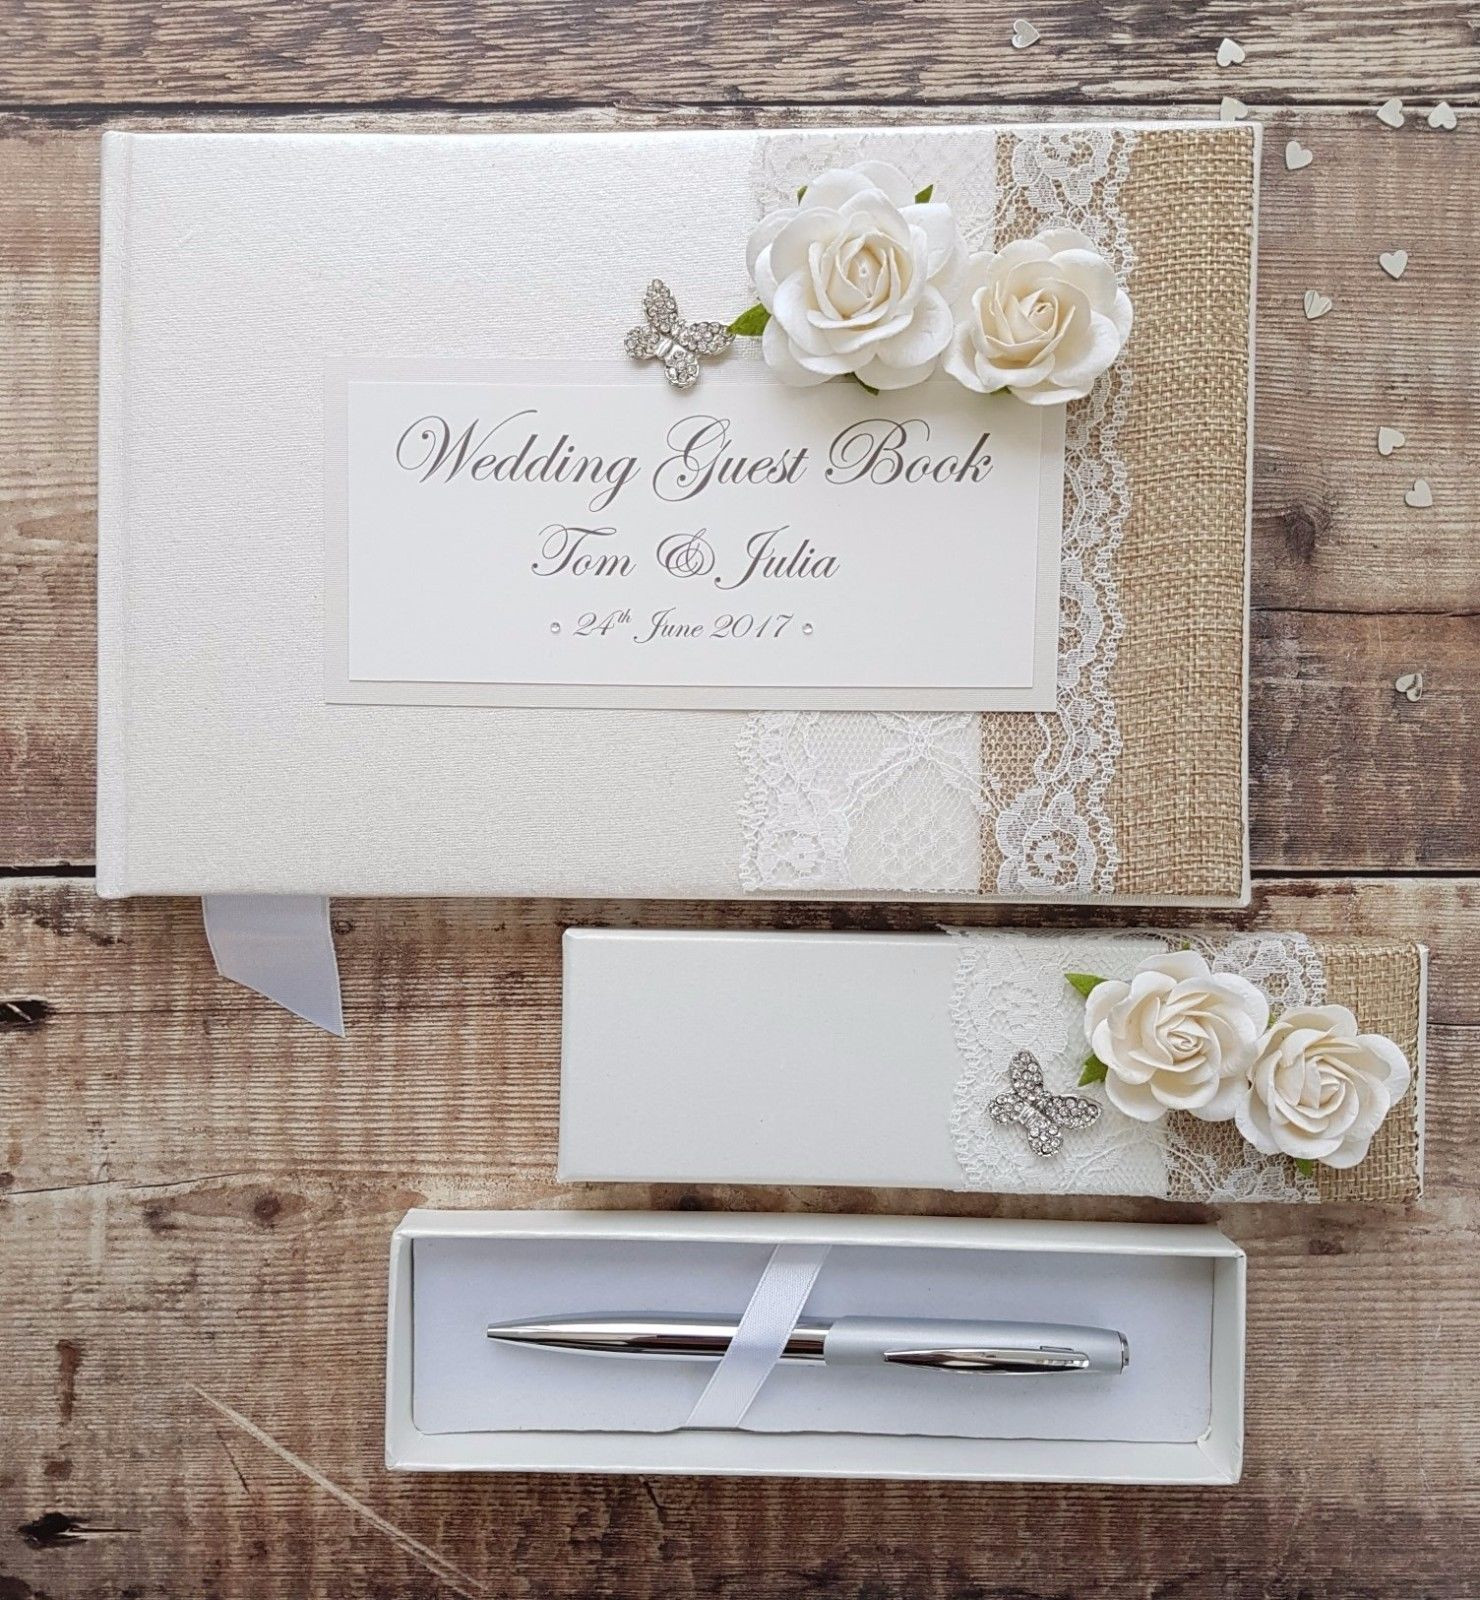 Wedding Guests Book
 Wedding Guest Book & Pen Set – Handmade Hessian Lace